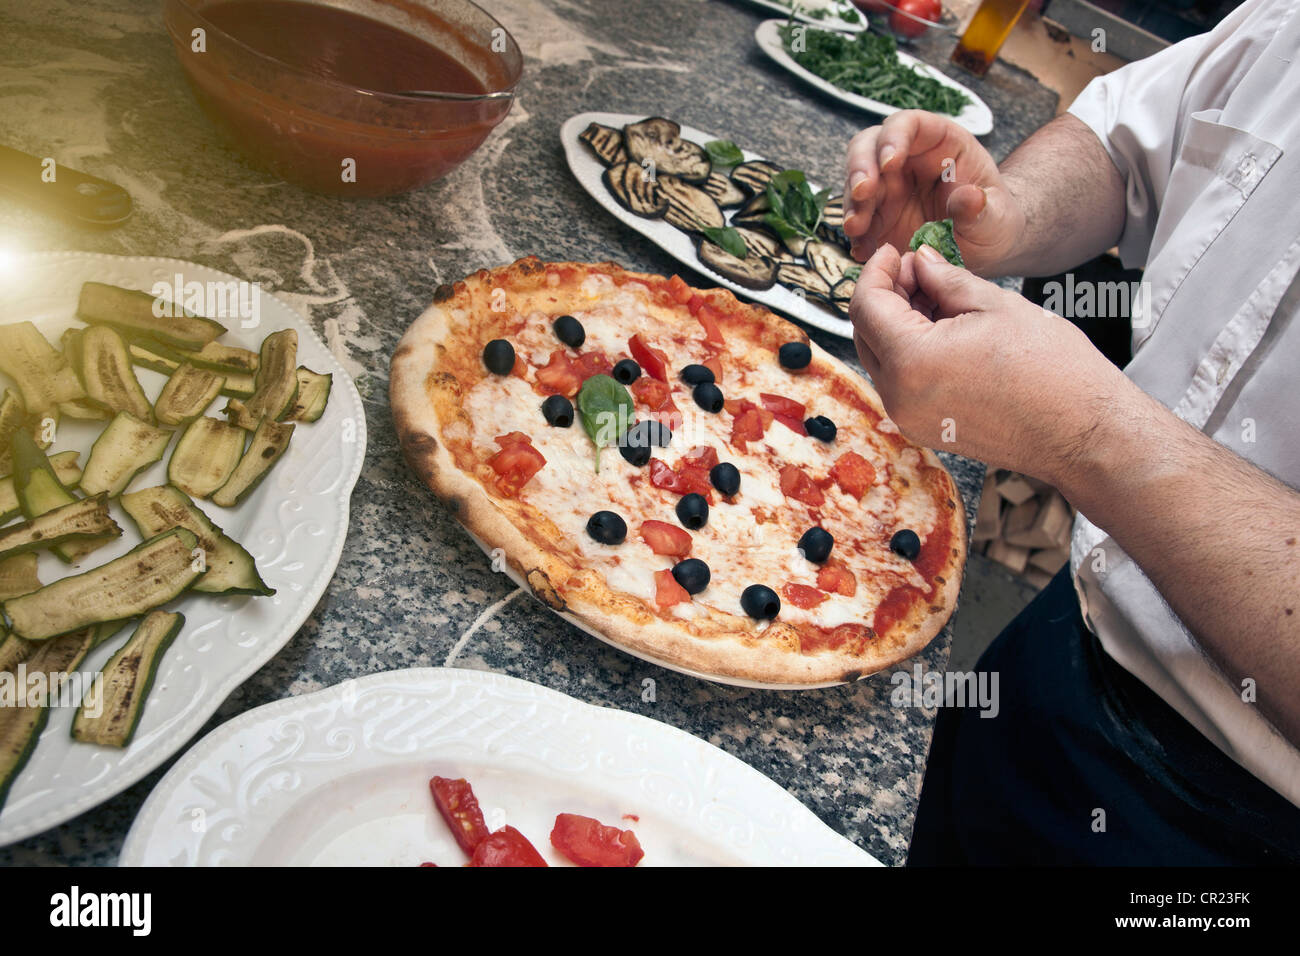 Chef garnishing pizza in kitchen Stock Photo